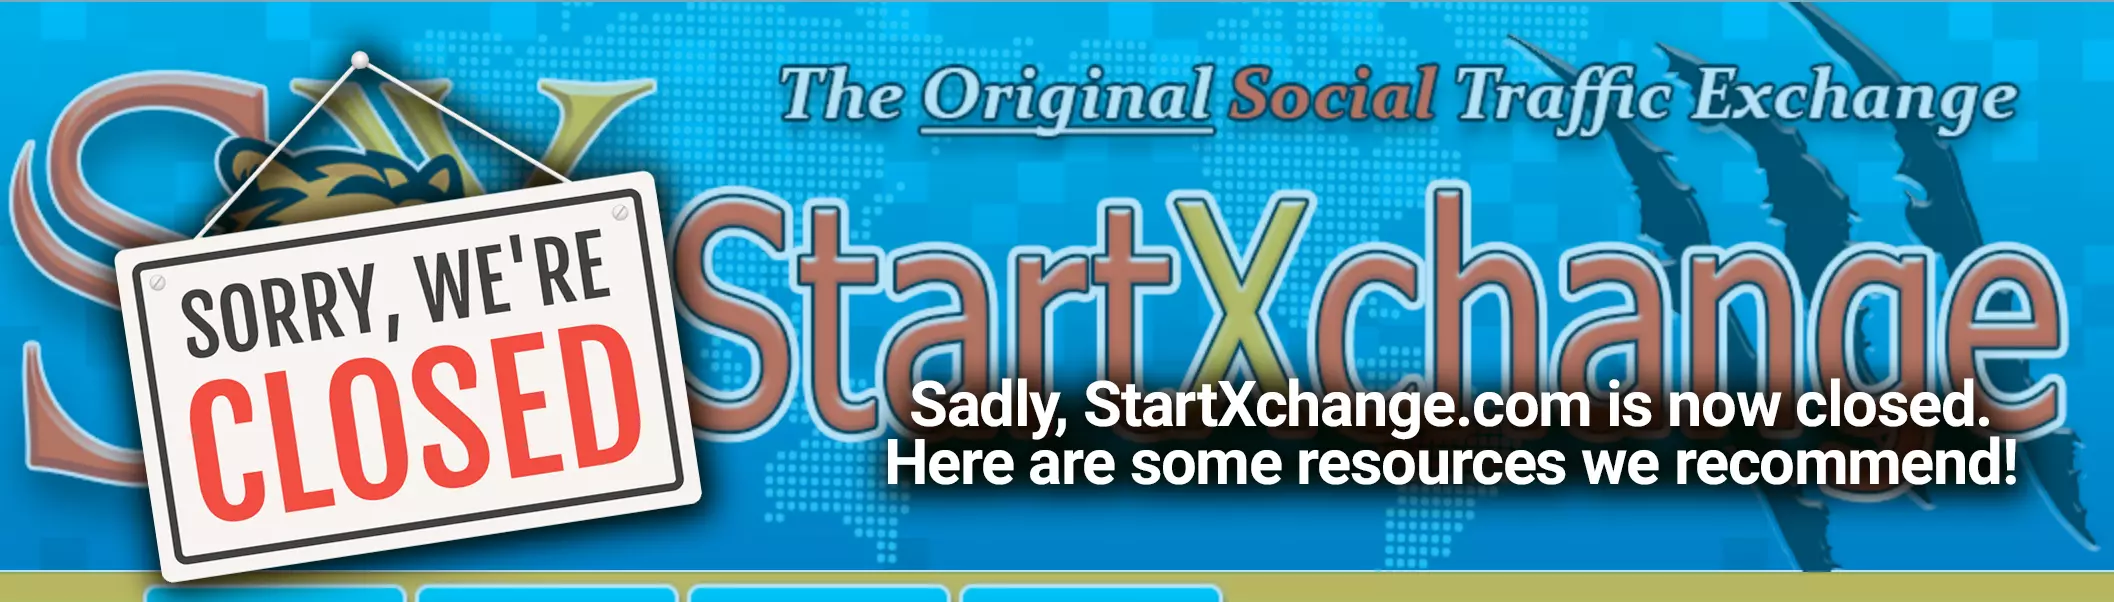 StartXchange.com is Now Closed!